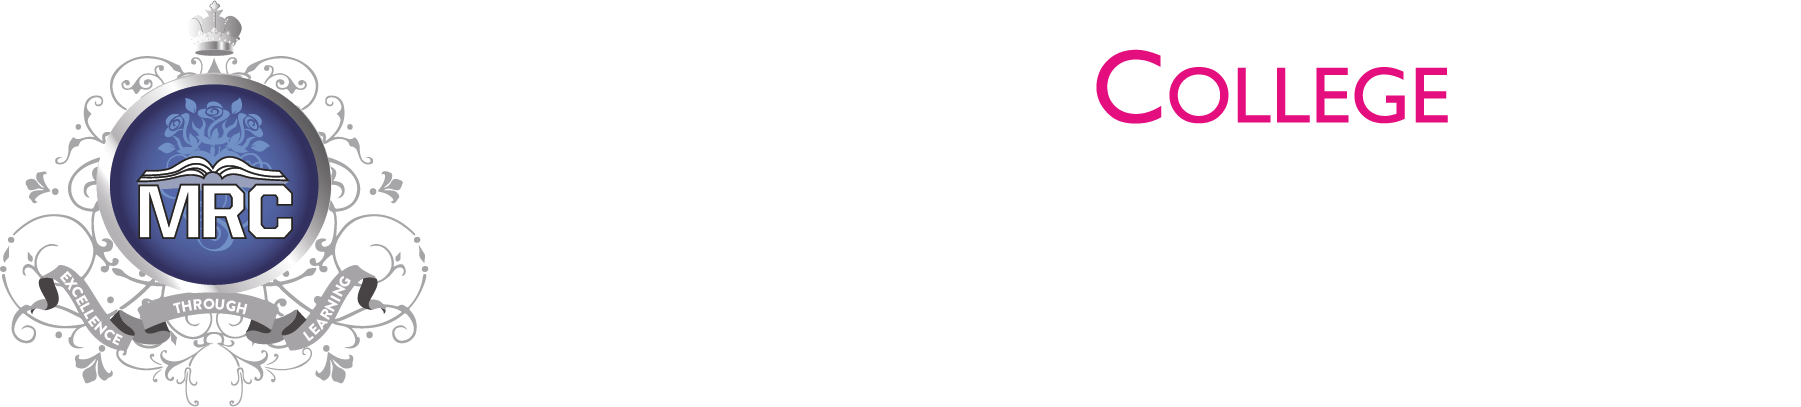 Mont Rose College Employability